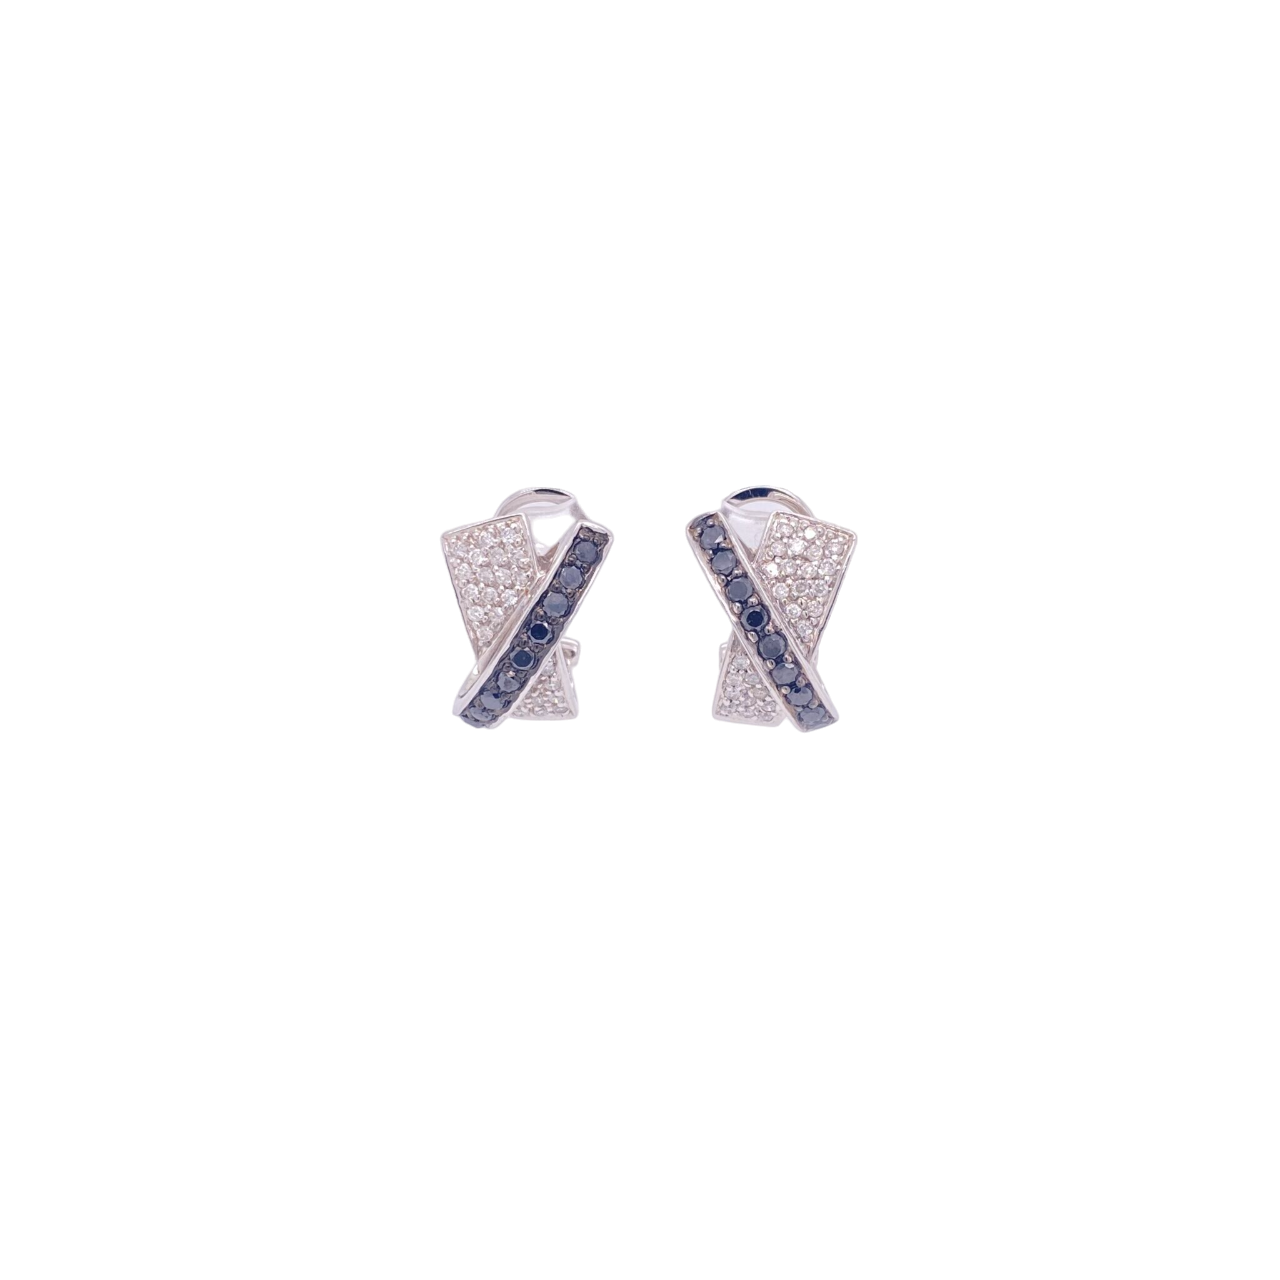 Black Diamond Earrings 14 Karat White Gold 1.08 Carats